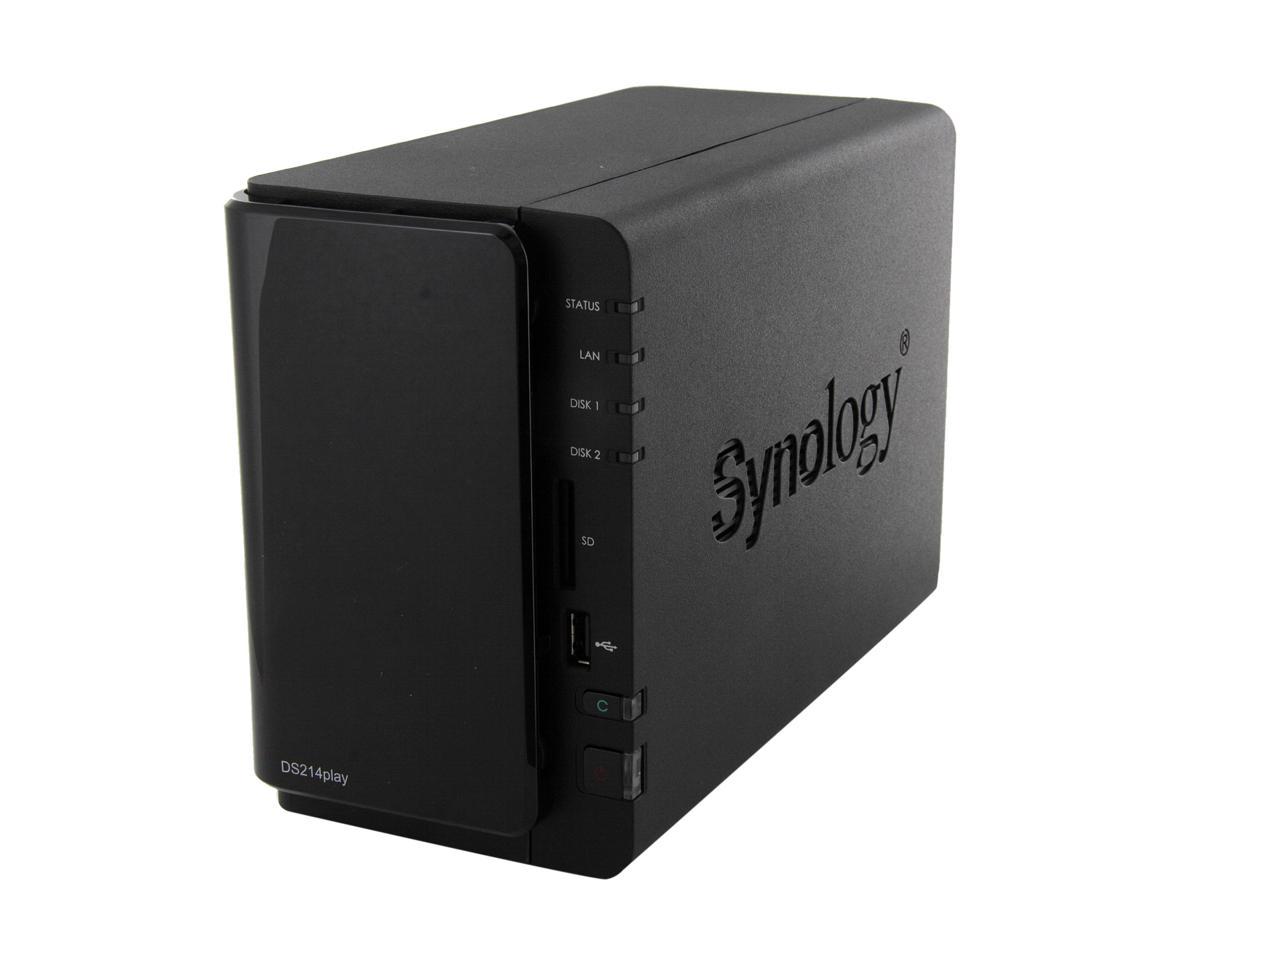 Synology DS214play Network Storage - Newegg.com